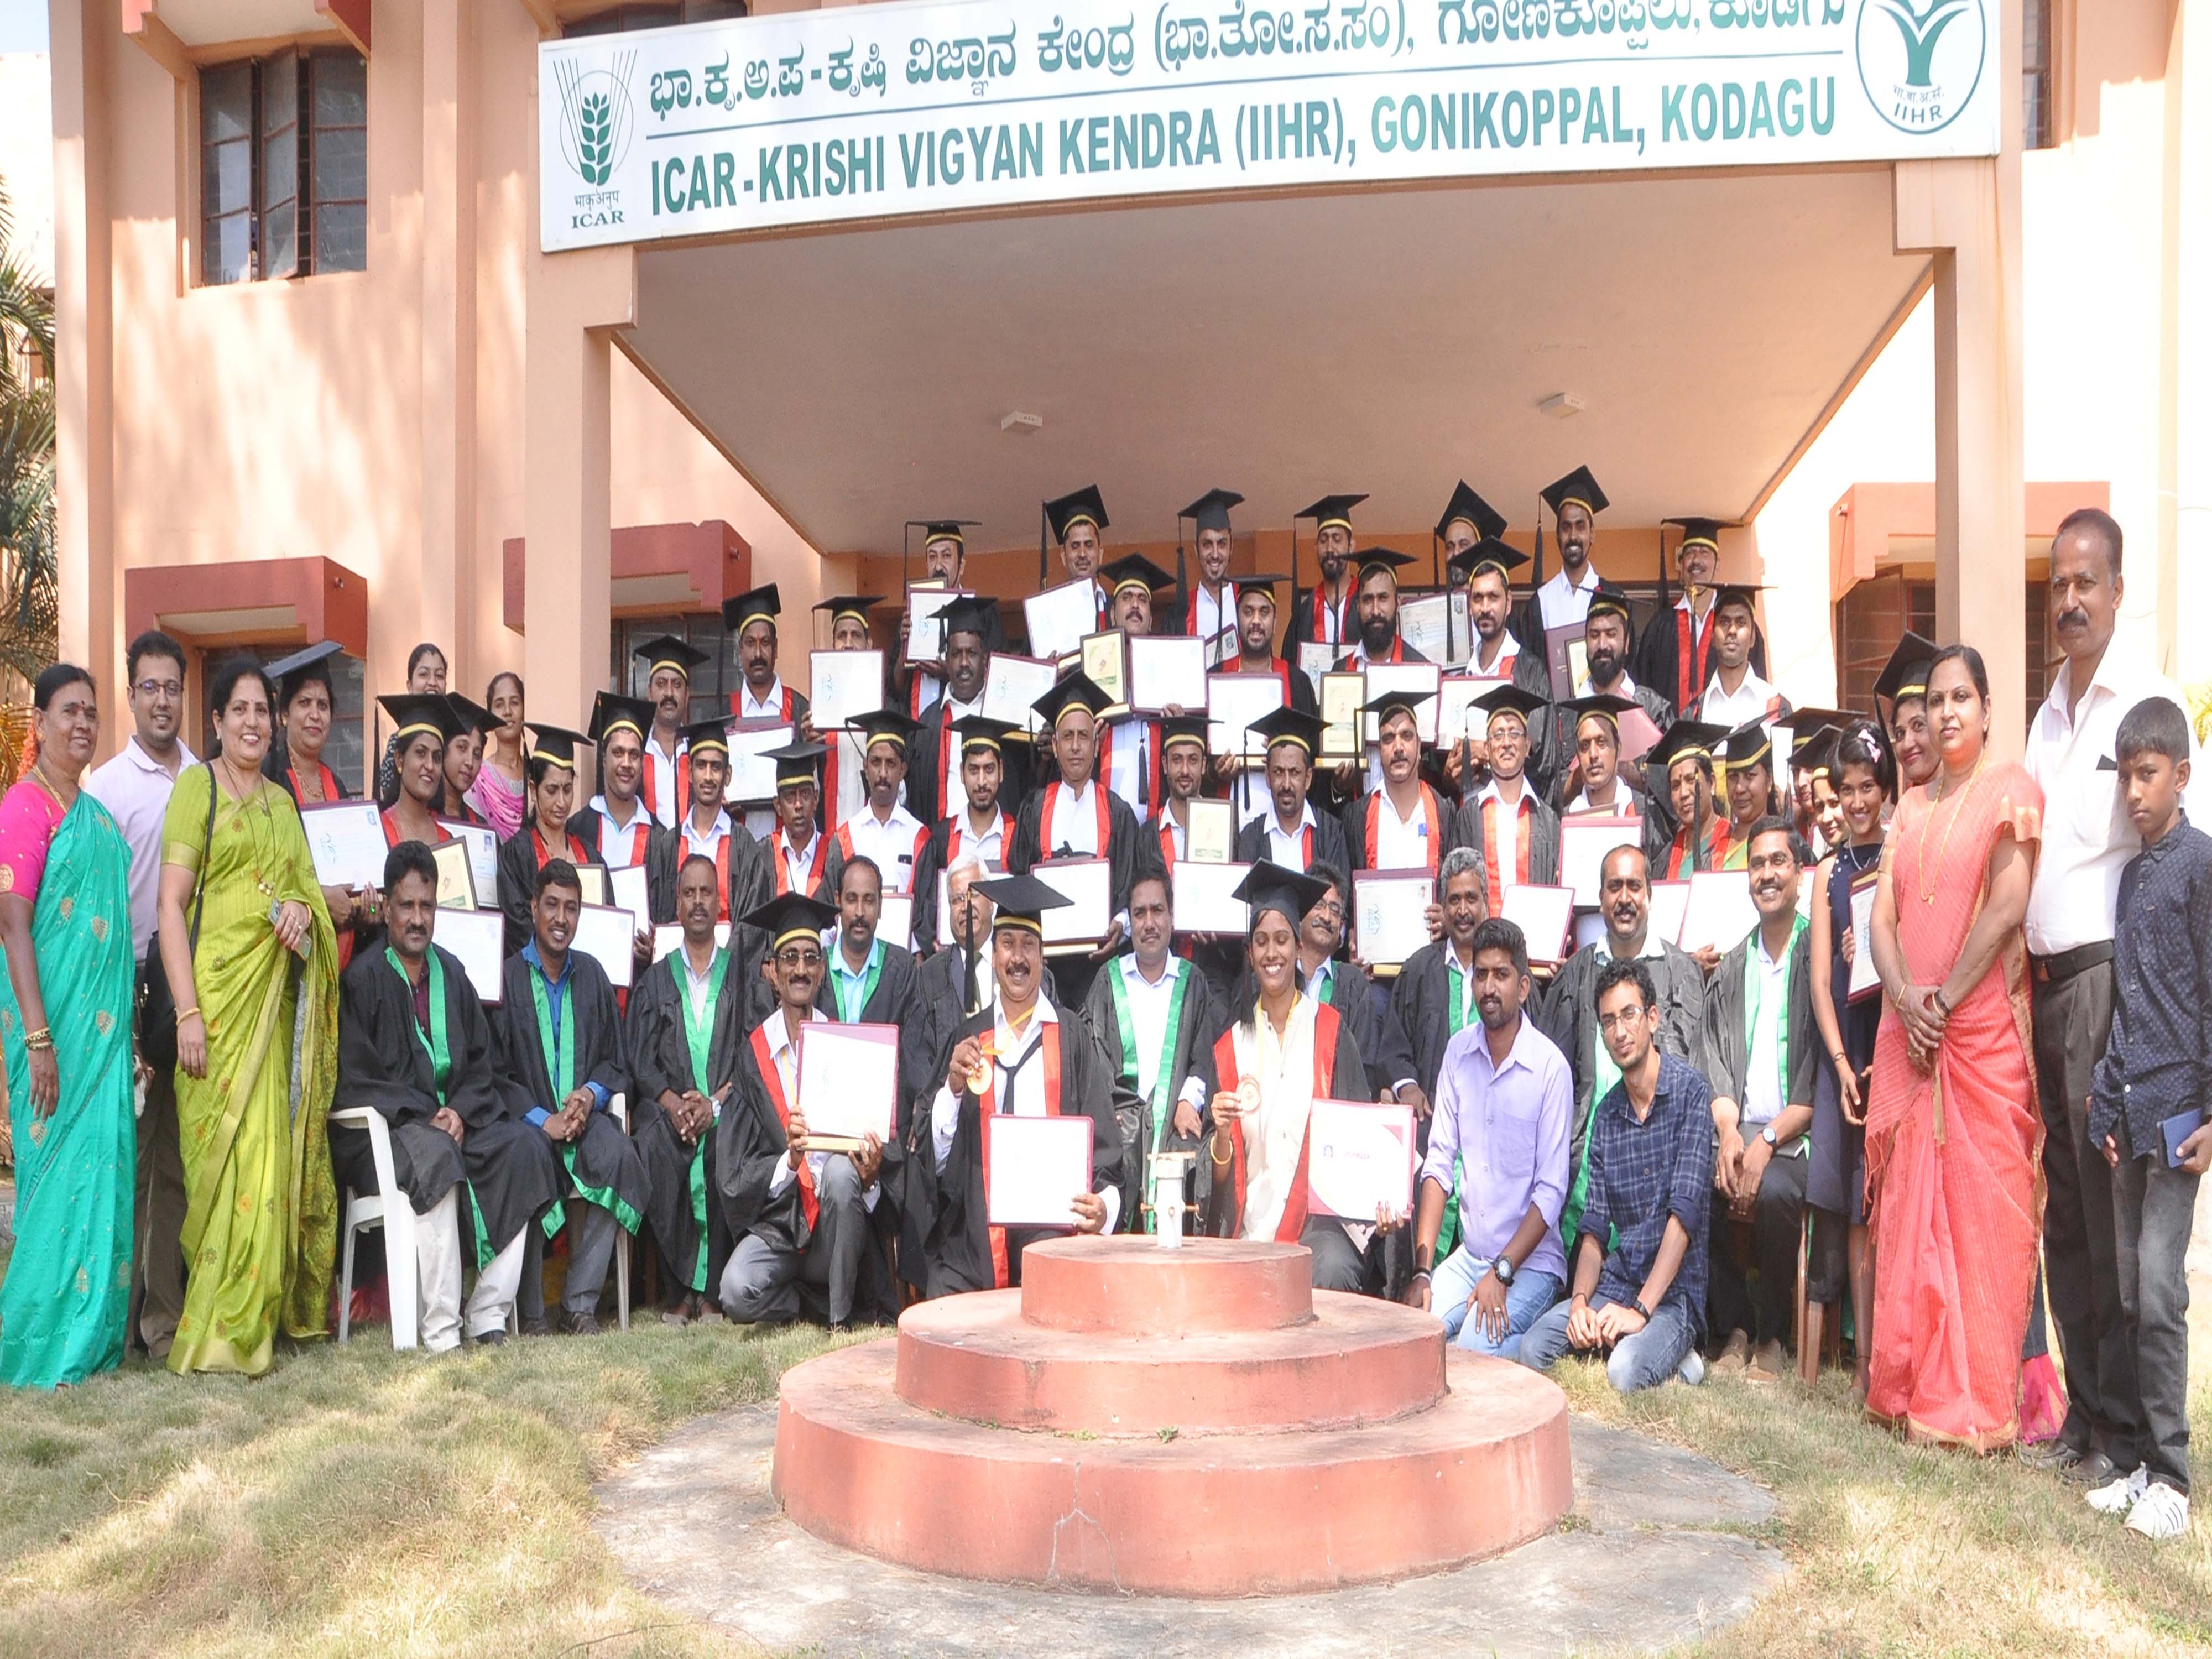 Graduation day of DAESI course at KVK Gonikoppal